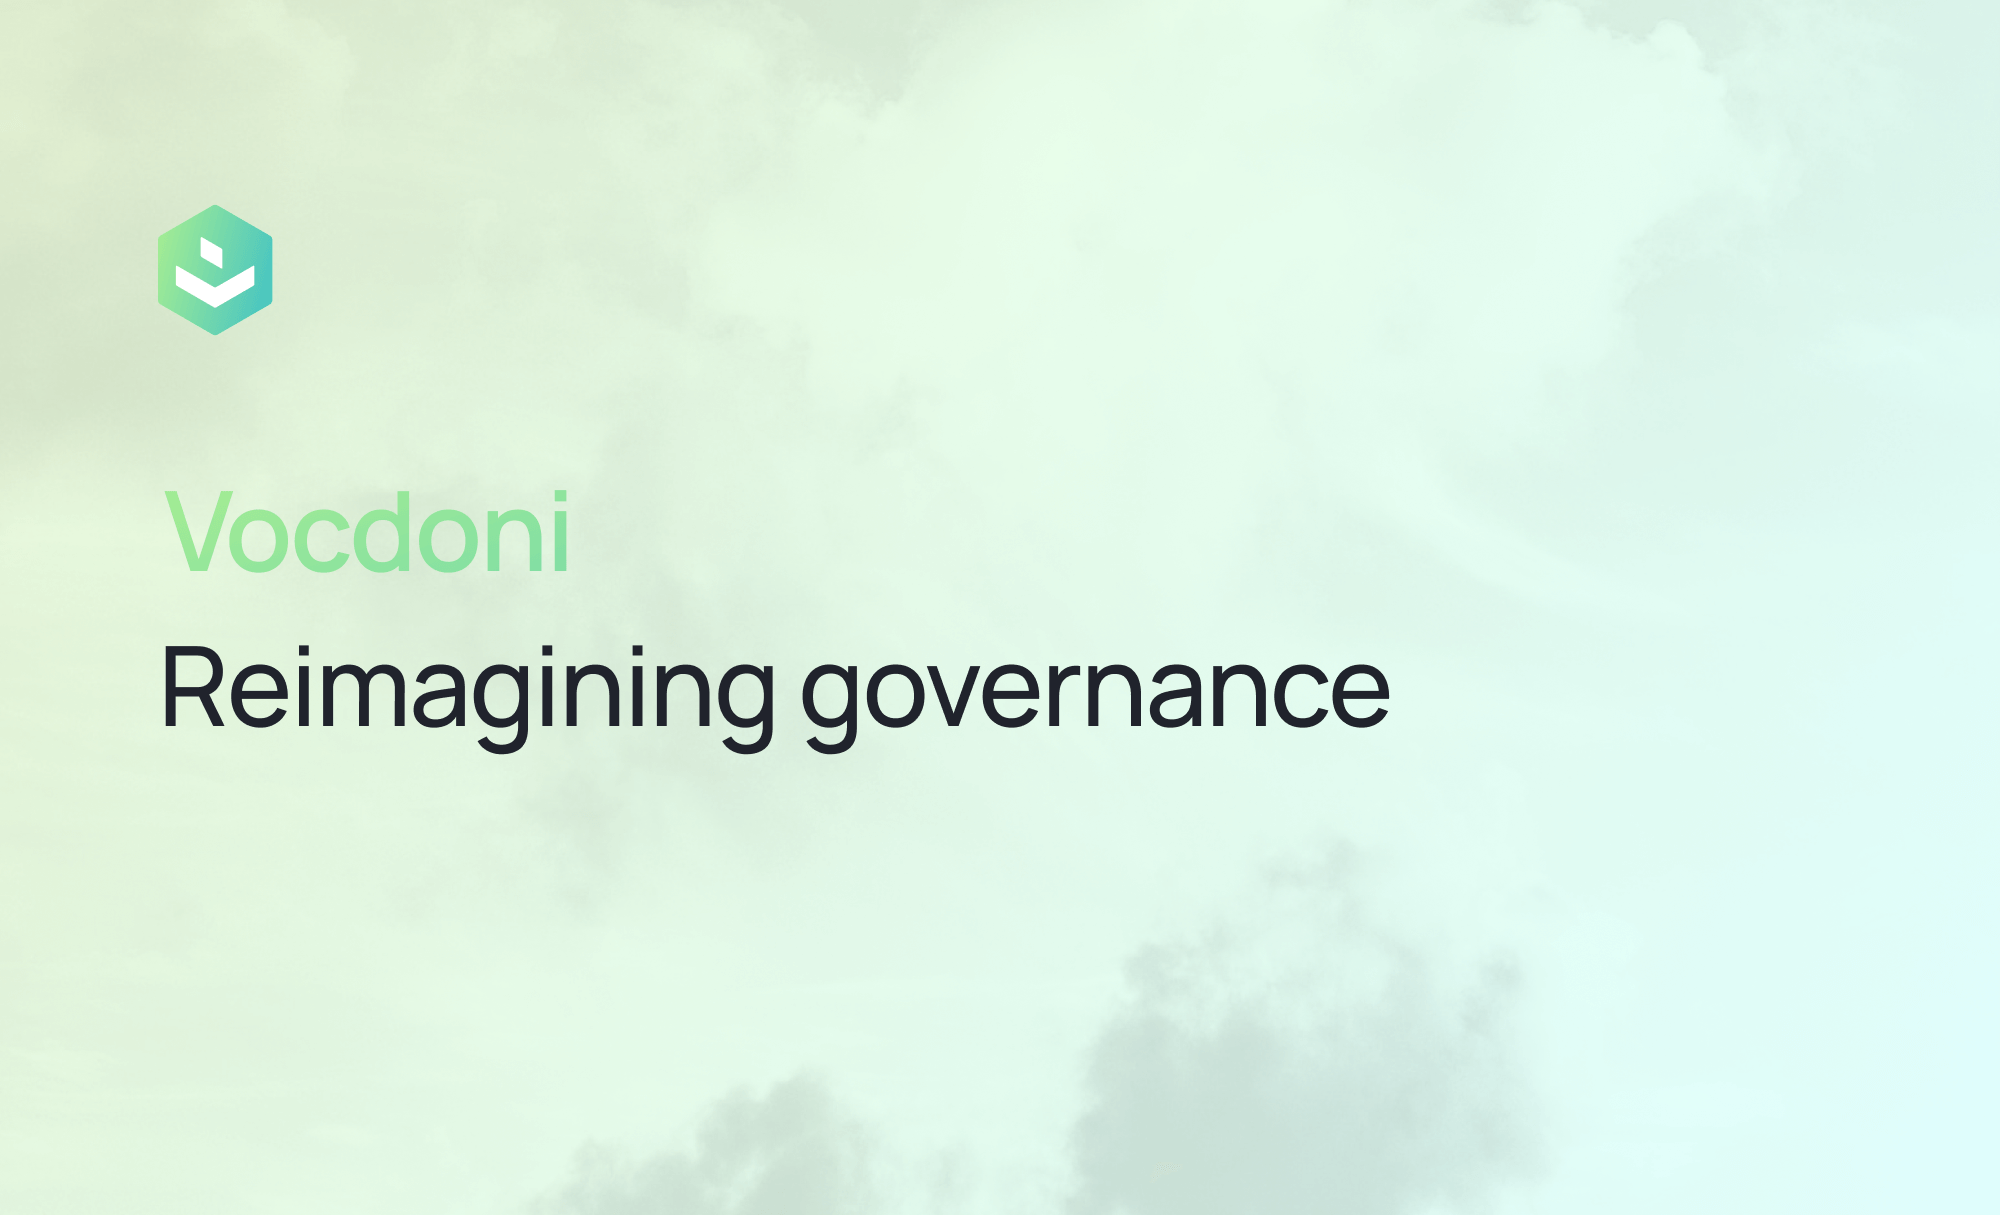 Vocdoni, reimagining governance